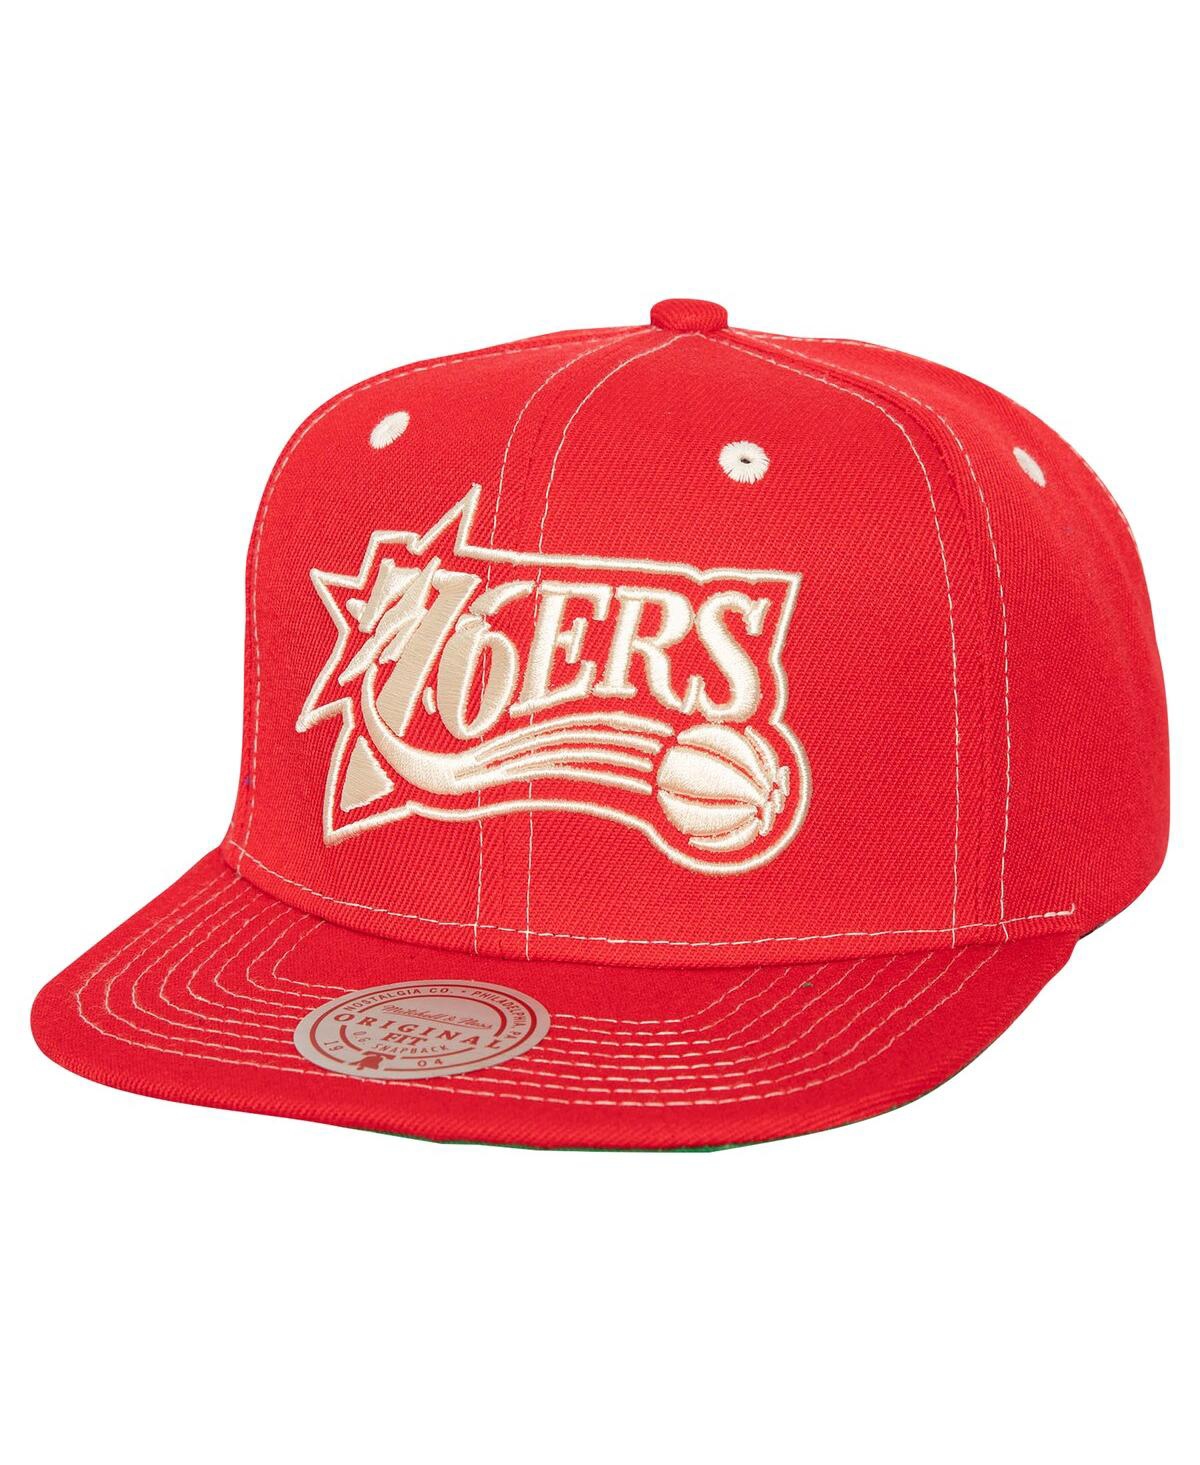 Mitchell Ness Men's Red Philadelphia 76ers Energy Contrast Snapback Hat - Red